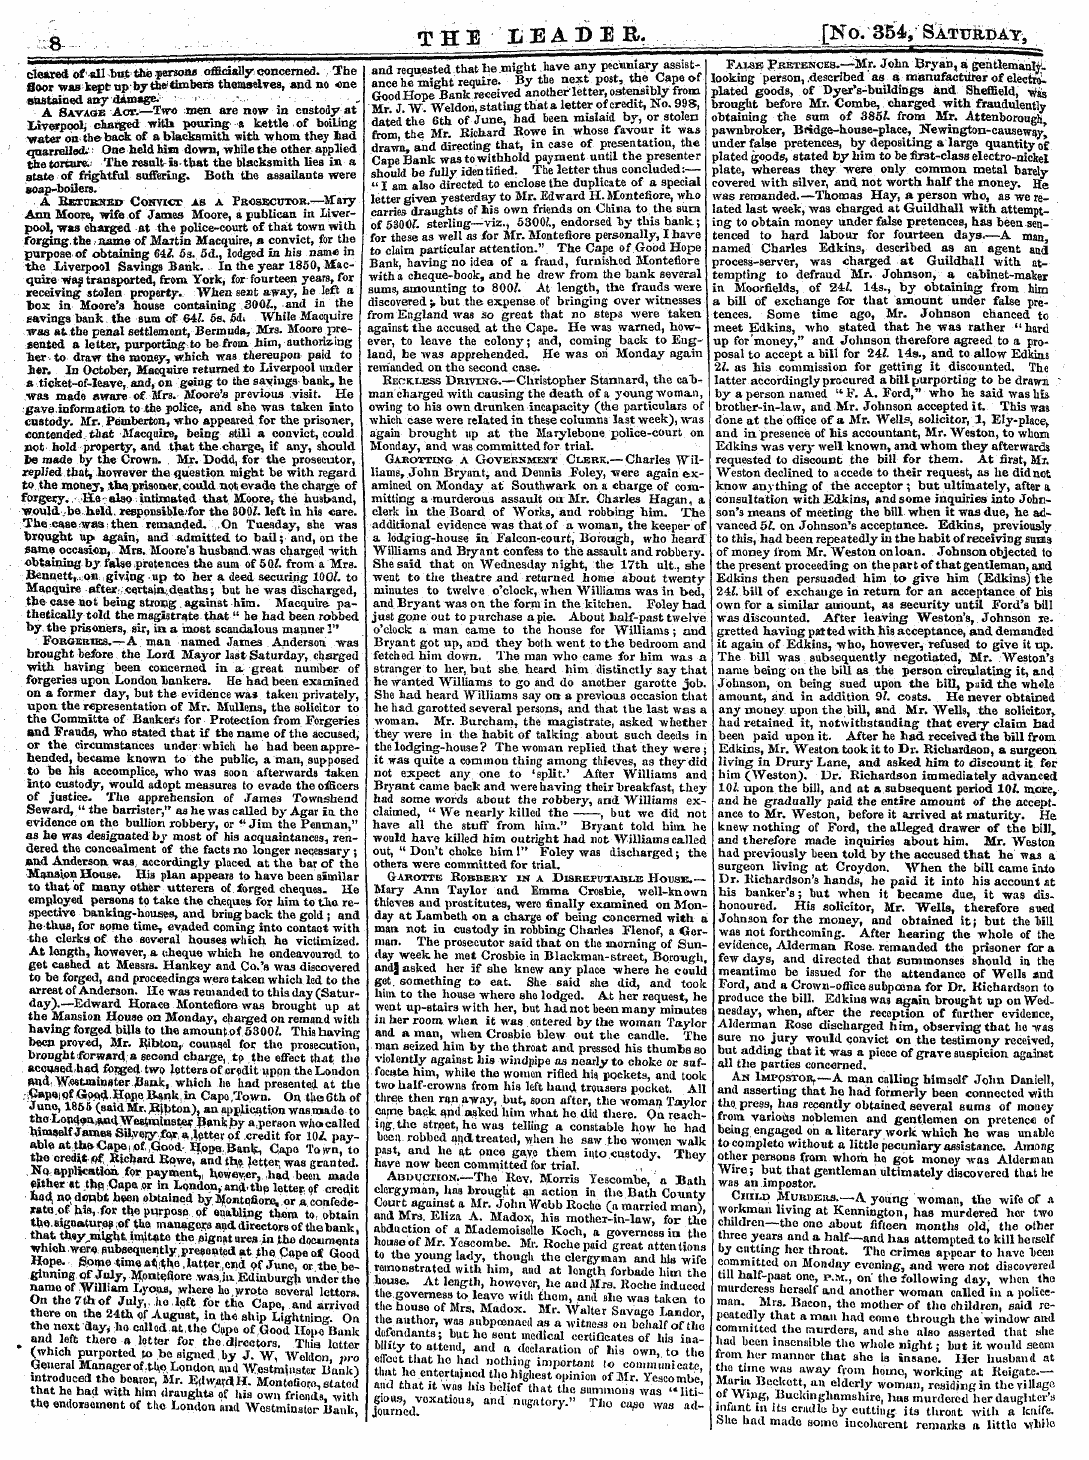 Leader (1850-1860): jS F Y, 2nd edition - Refkieve Kitfkieve